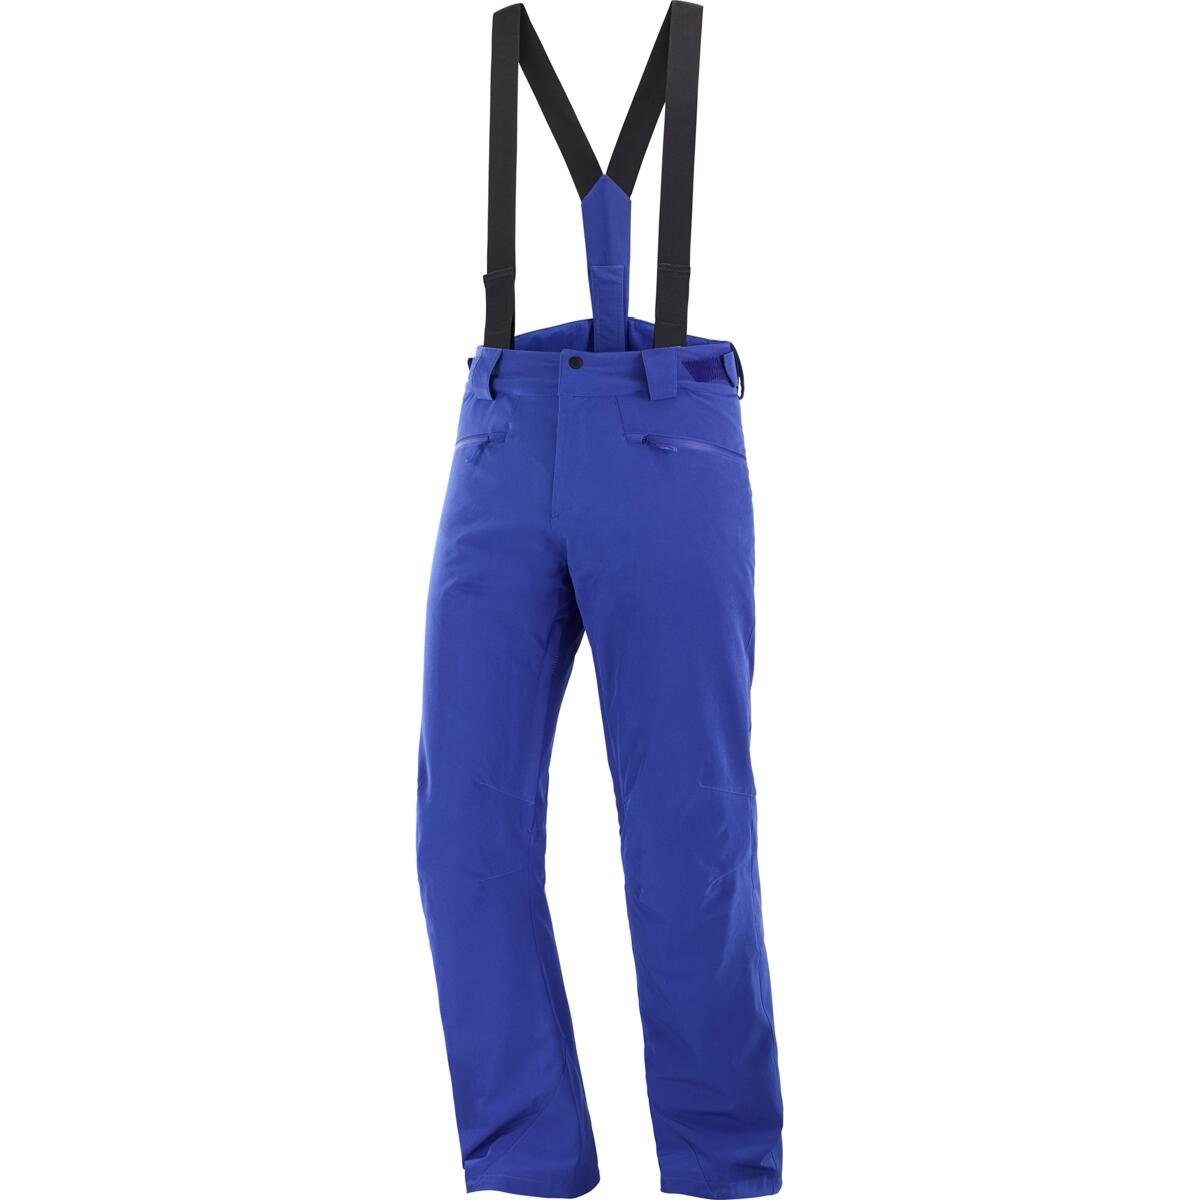 Nohavice Salomon Edge Pant M - modré (štandardná dĺžka)